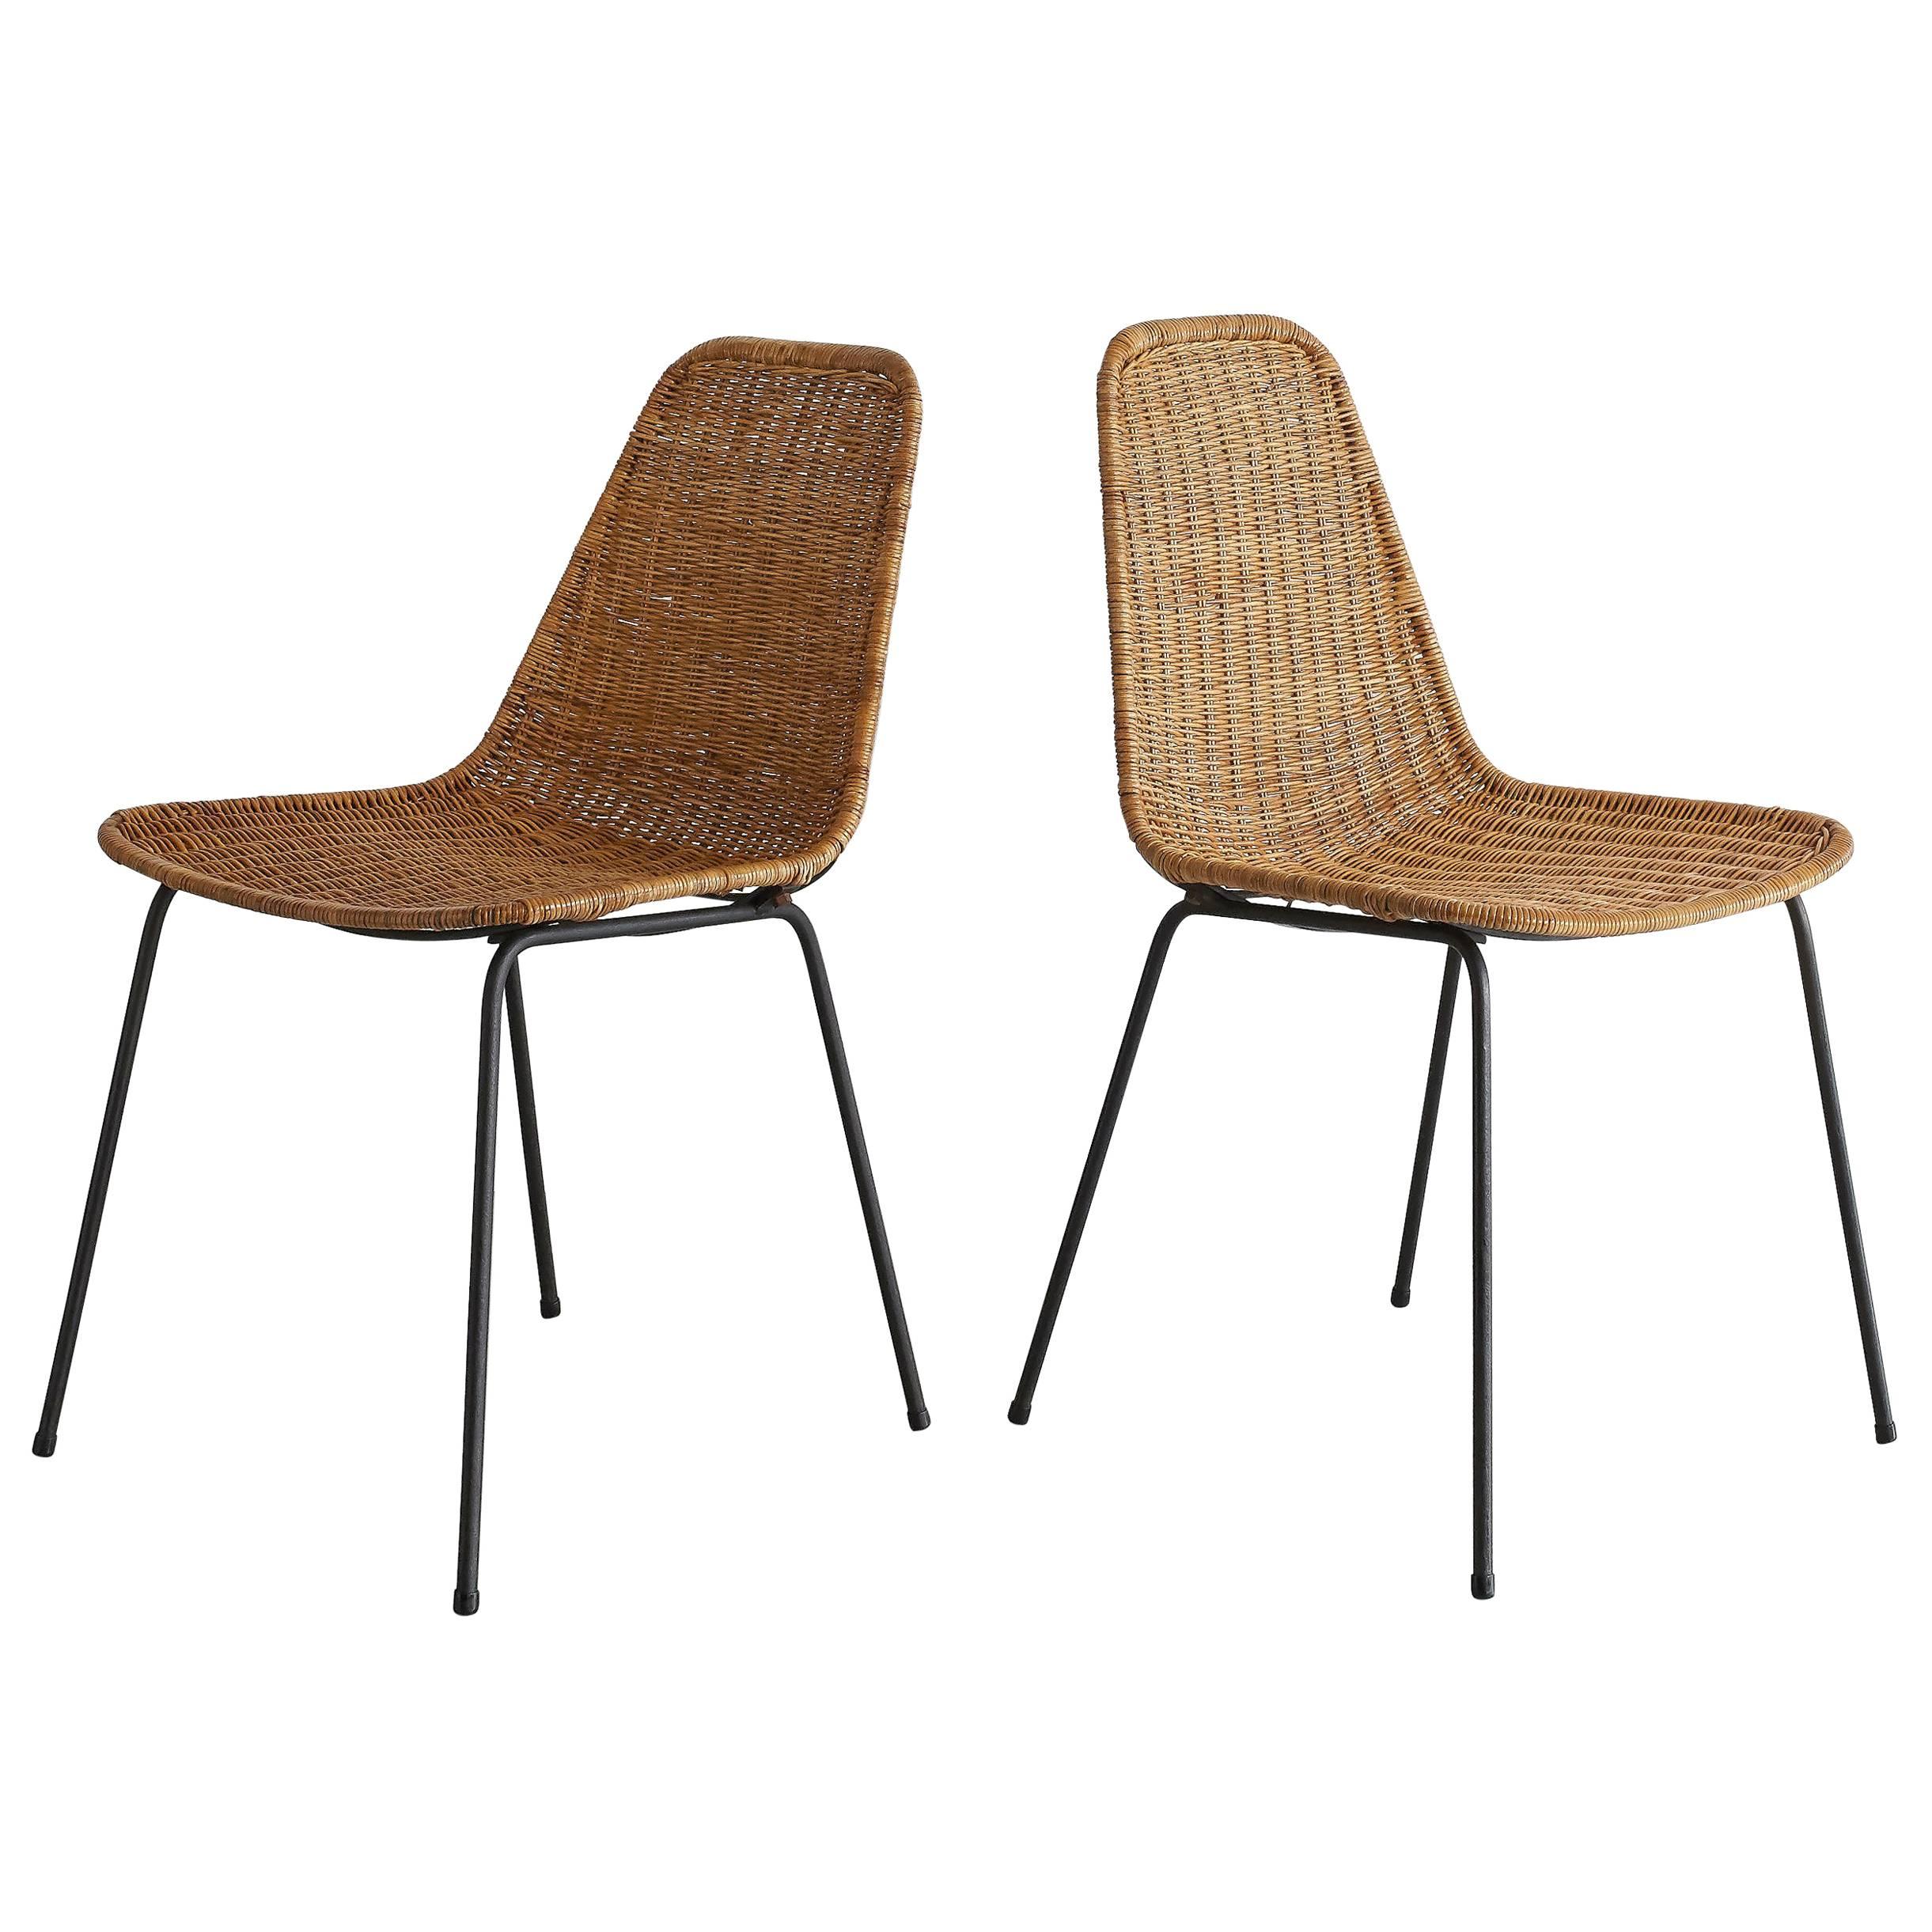 Pair of Carlo Graffi Wicker and Iron Chairs